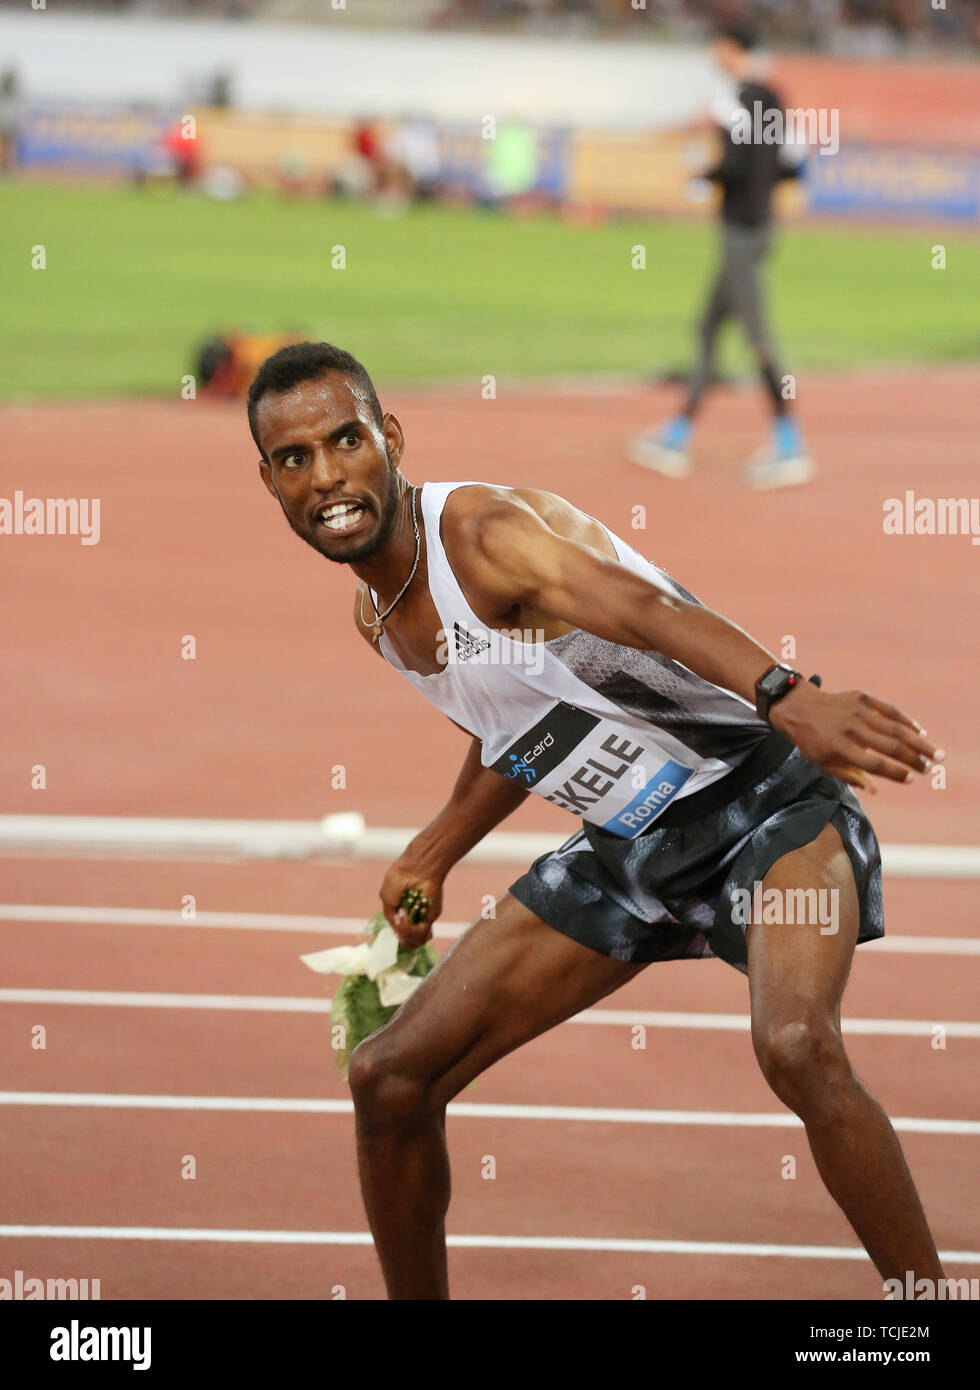 ROME, ITALY - JUN 06: Telahun Haile Bekele of Ethiopia competes in the Men 5000m event during the IAAF Diamond League 2019 Golden Gala Pietro Mennea i Stock Photo